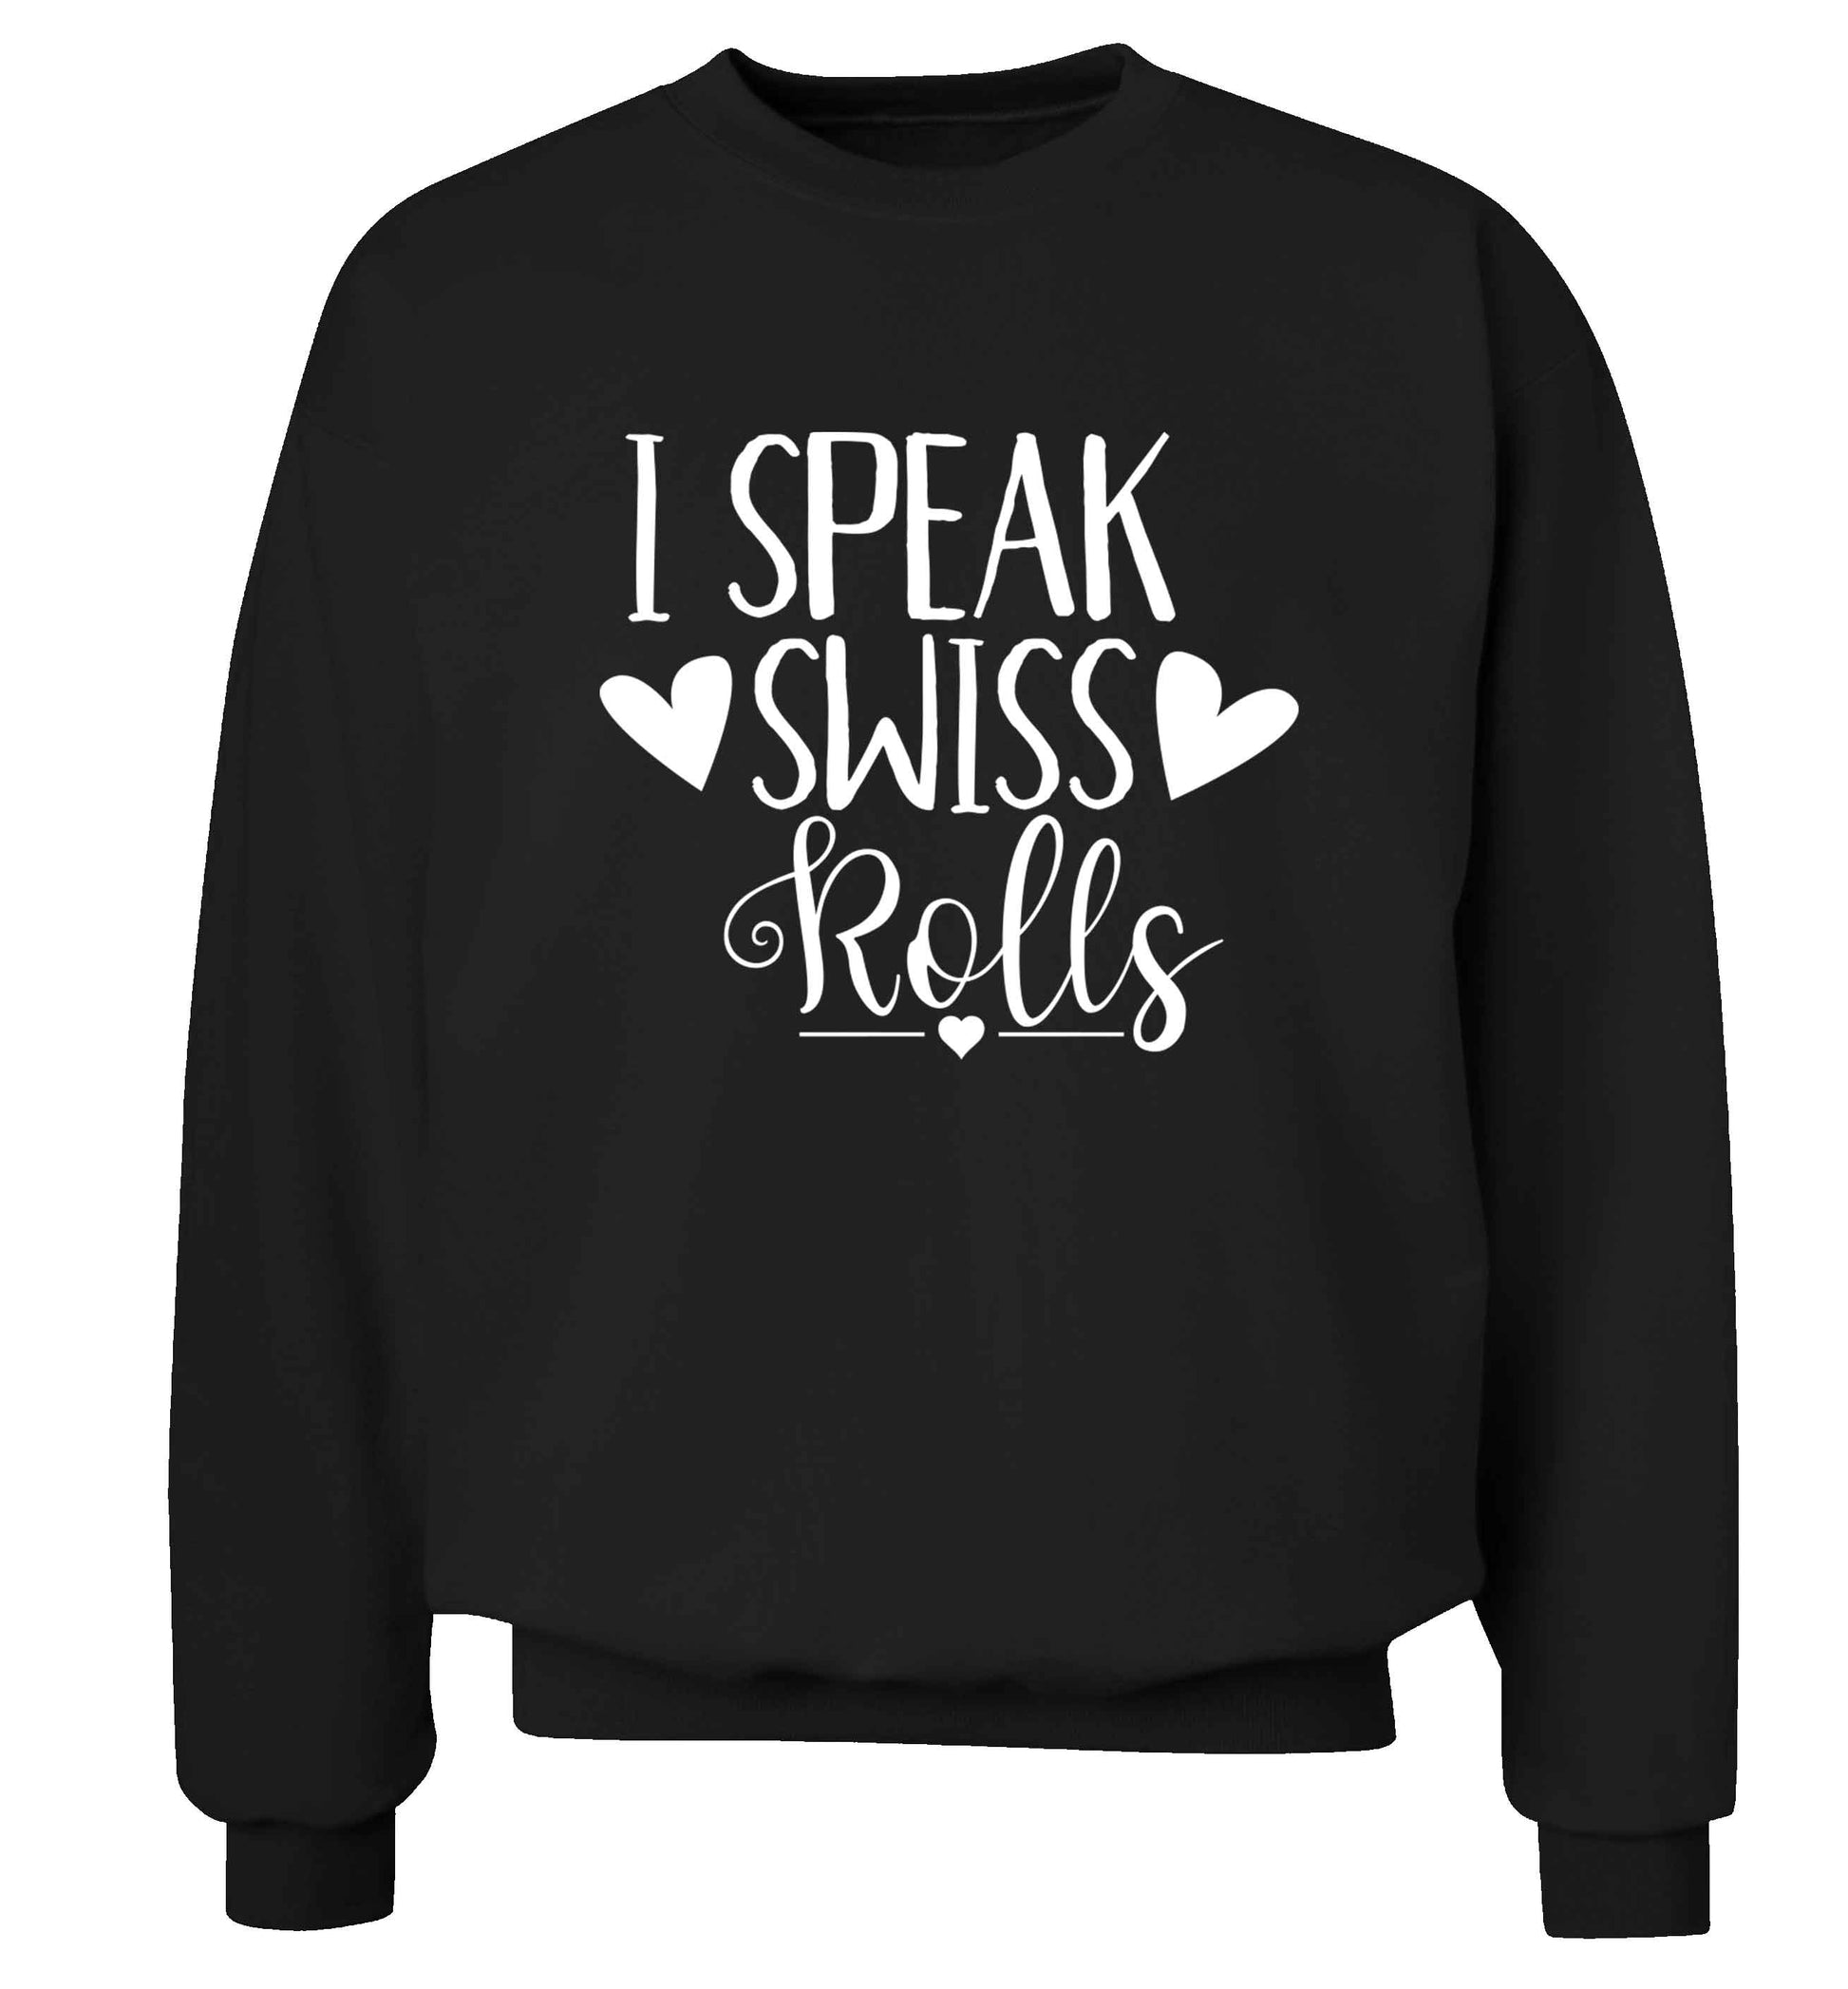 I speak swiss..rolls Adult's unisex black Sweater 2XL